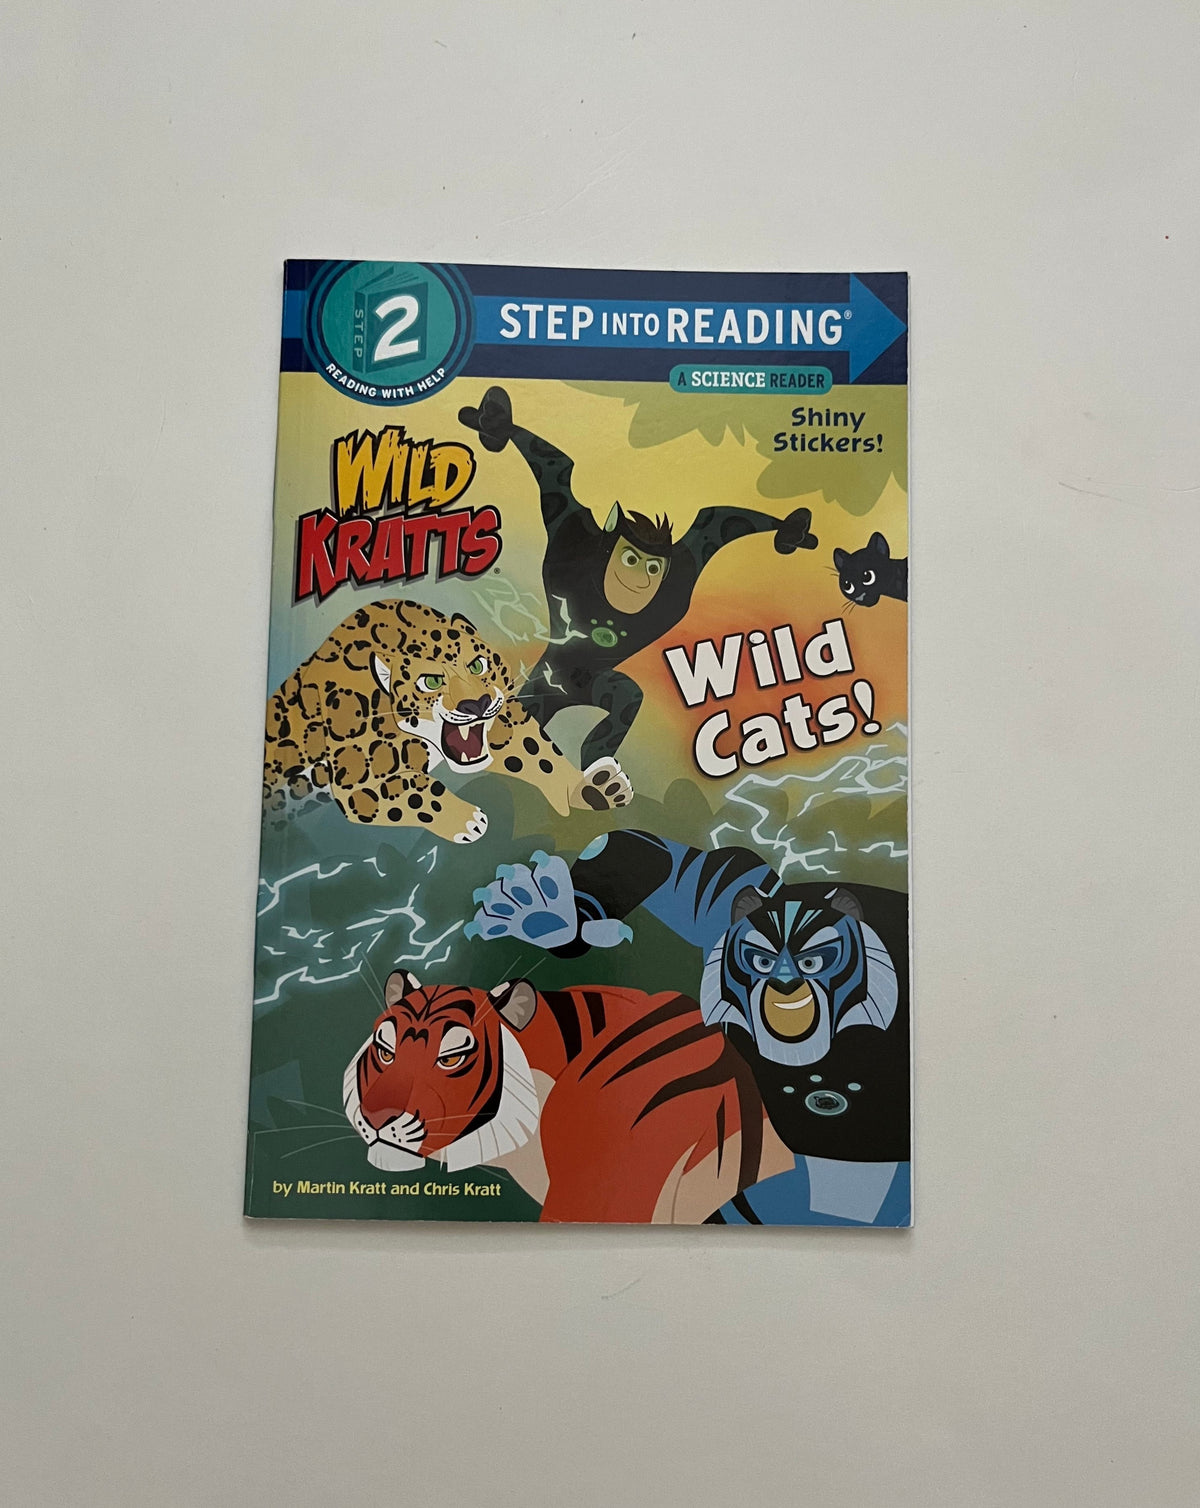 Wild Kratts: Wild Cats by the Kratt Brothers